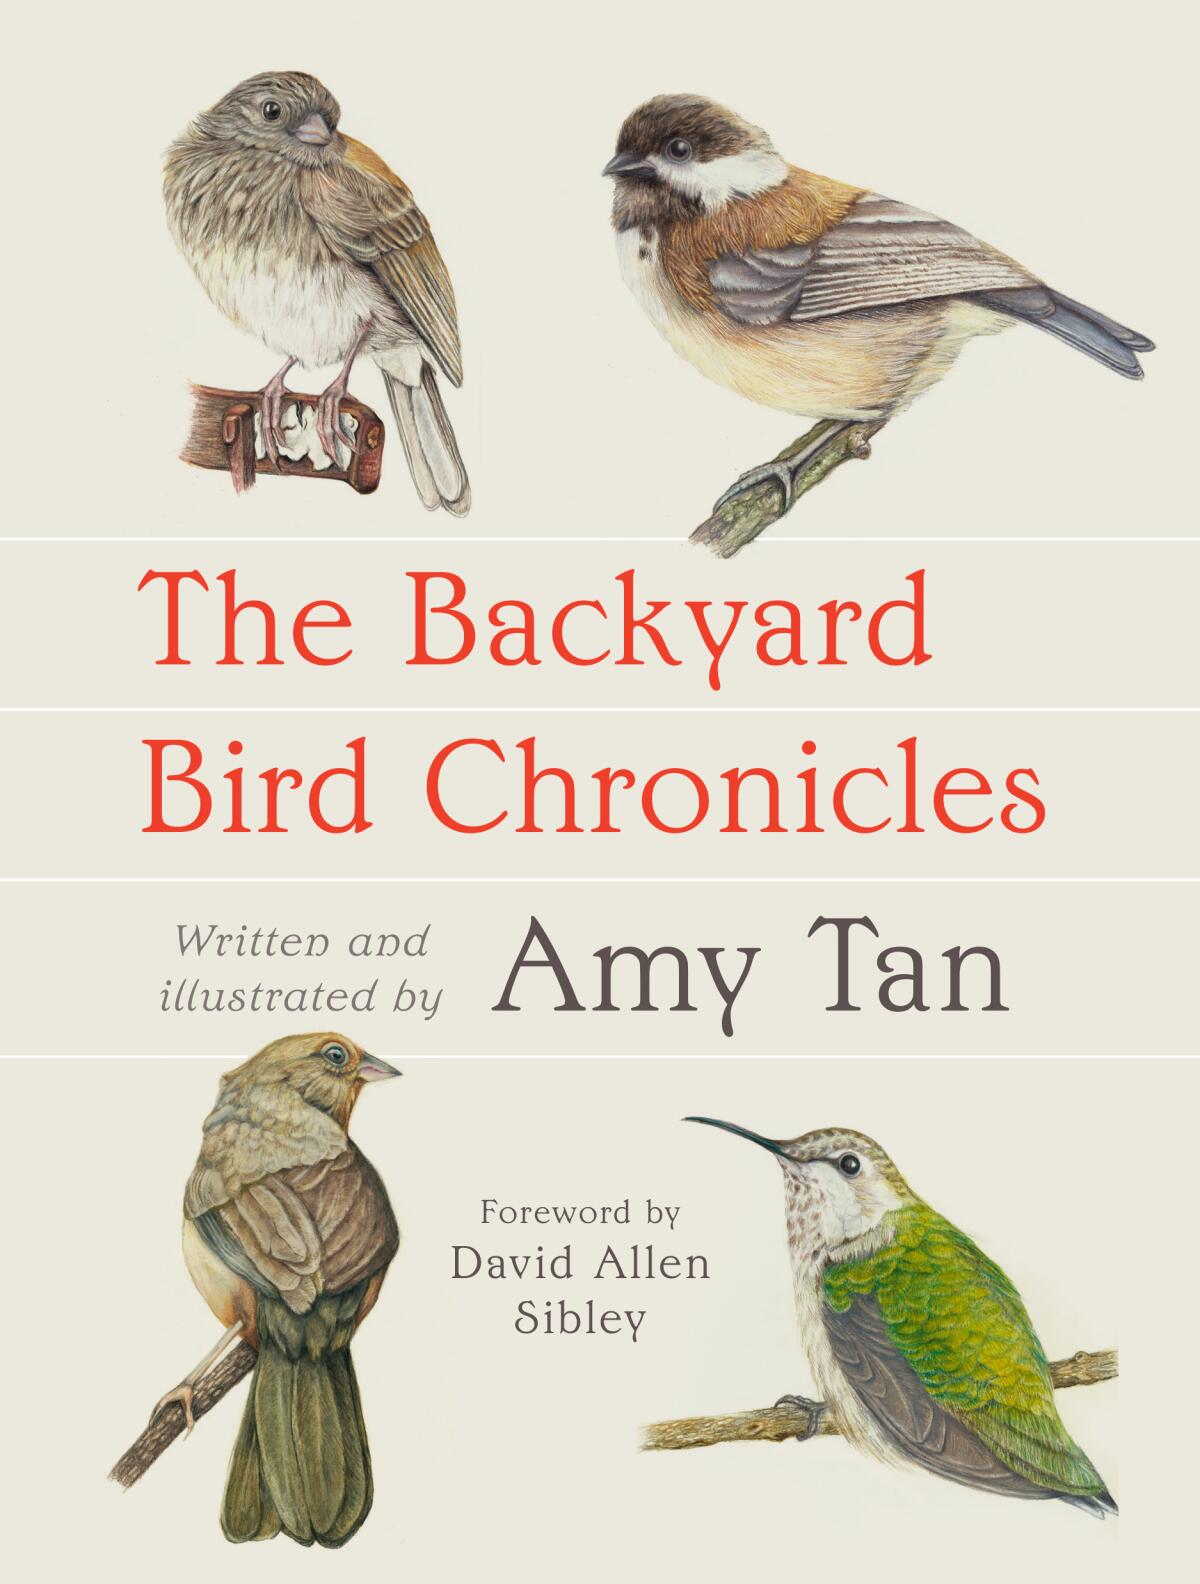 "The Backyard Bird Chronicles" by Amy Tan book jacket